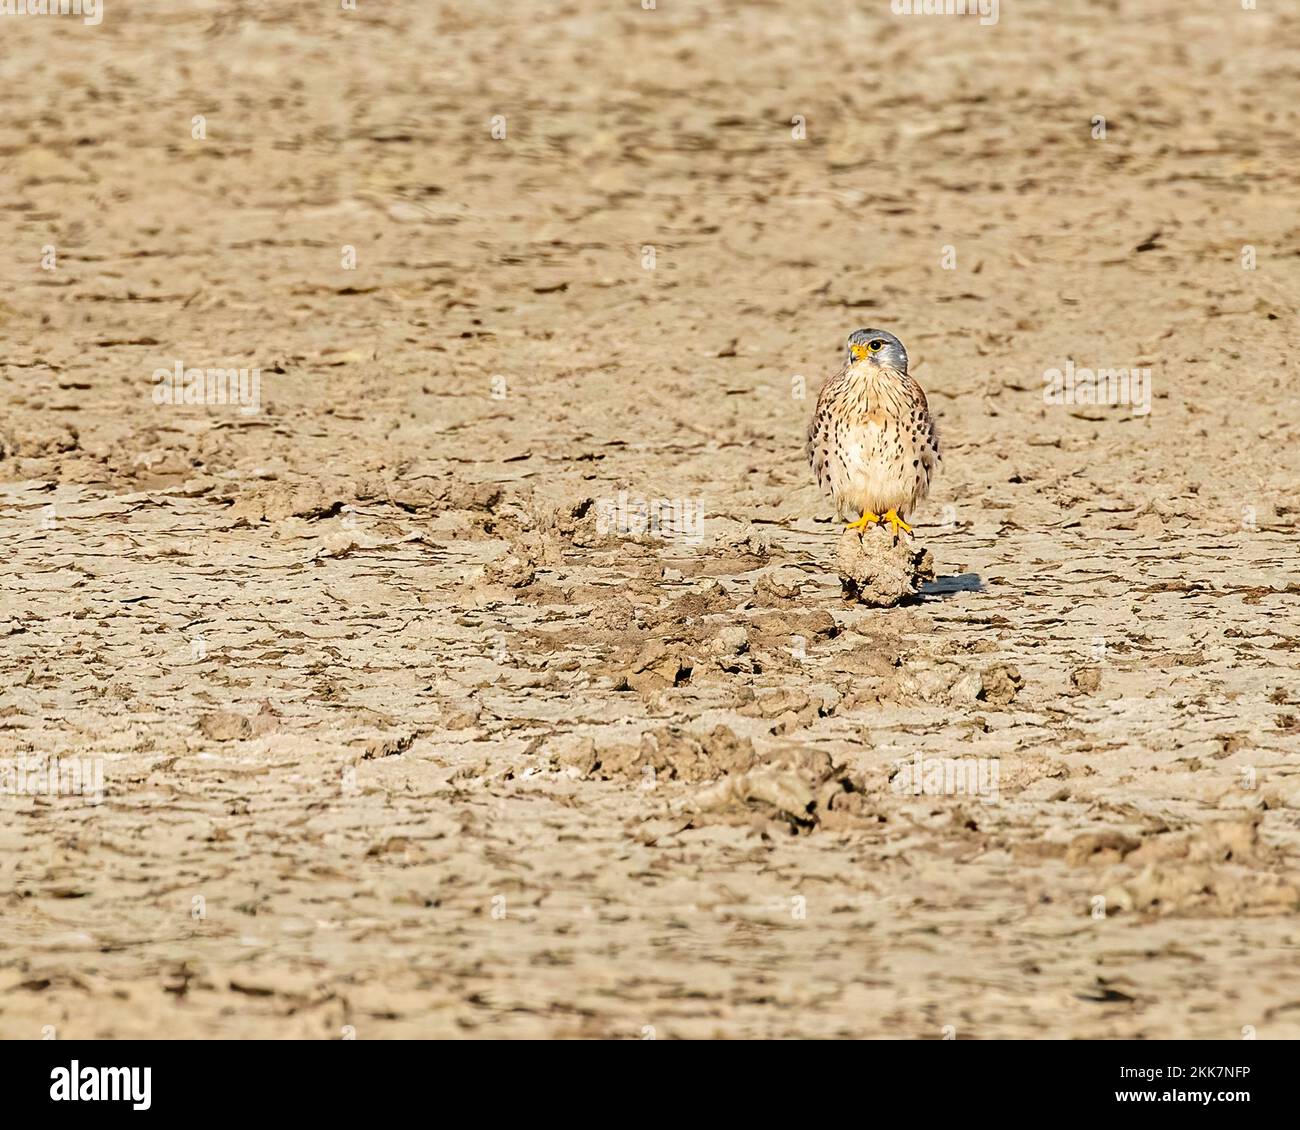 A Common kestrel sitting on sand in a desert Stock Photo